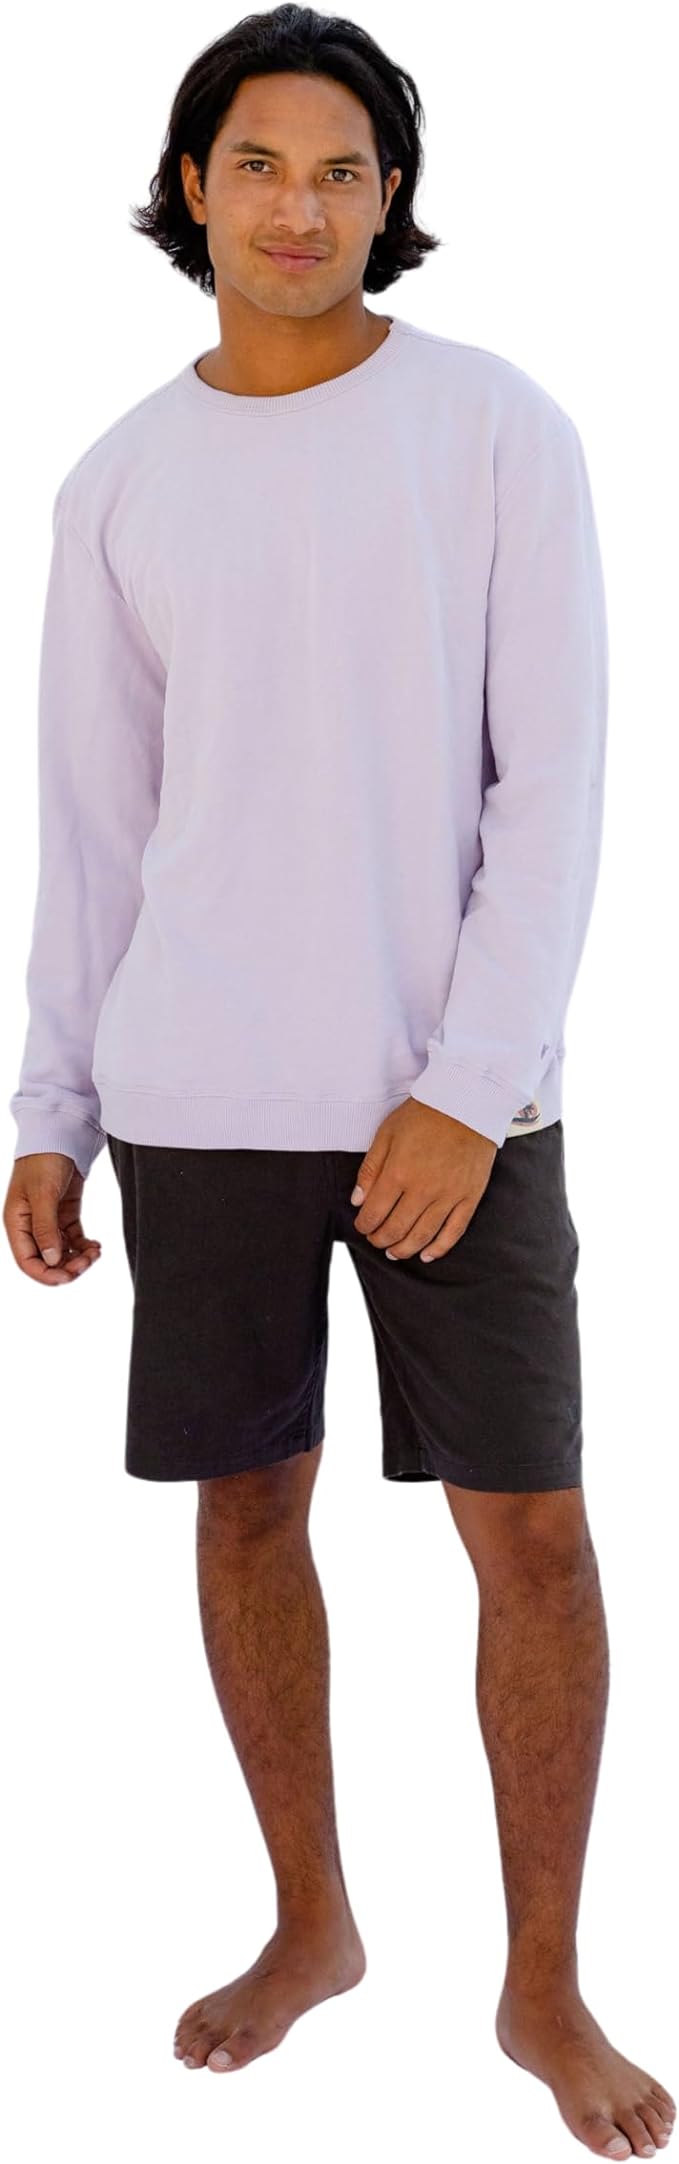 Hang Loose 100% Pima Cotton Sweatshirt